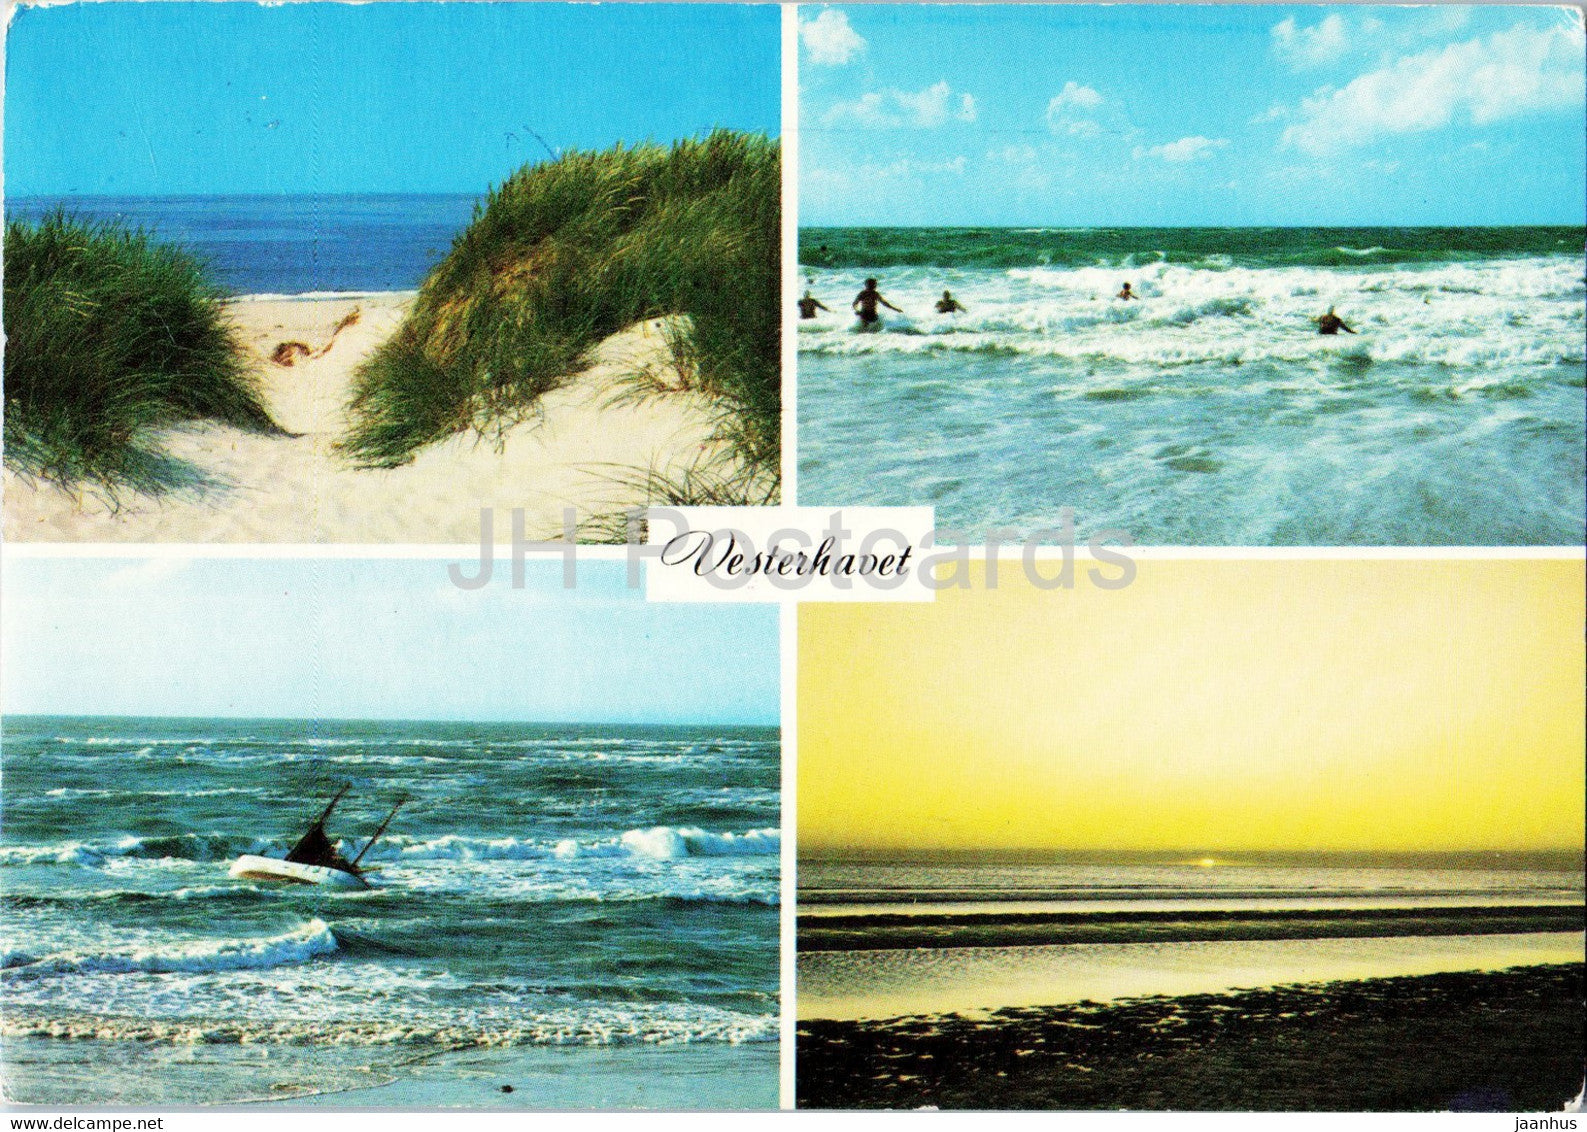 Vesterhavet - North Sea - multiview - 35443 - Denmark - used - JH Postcards